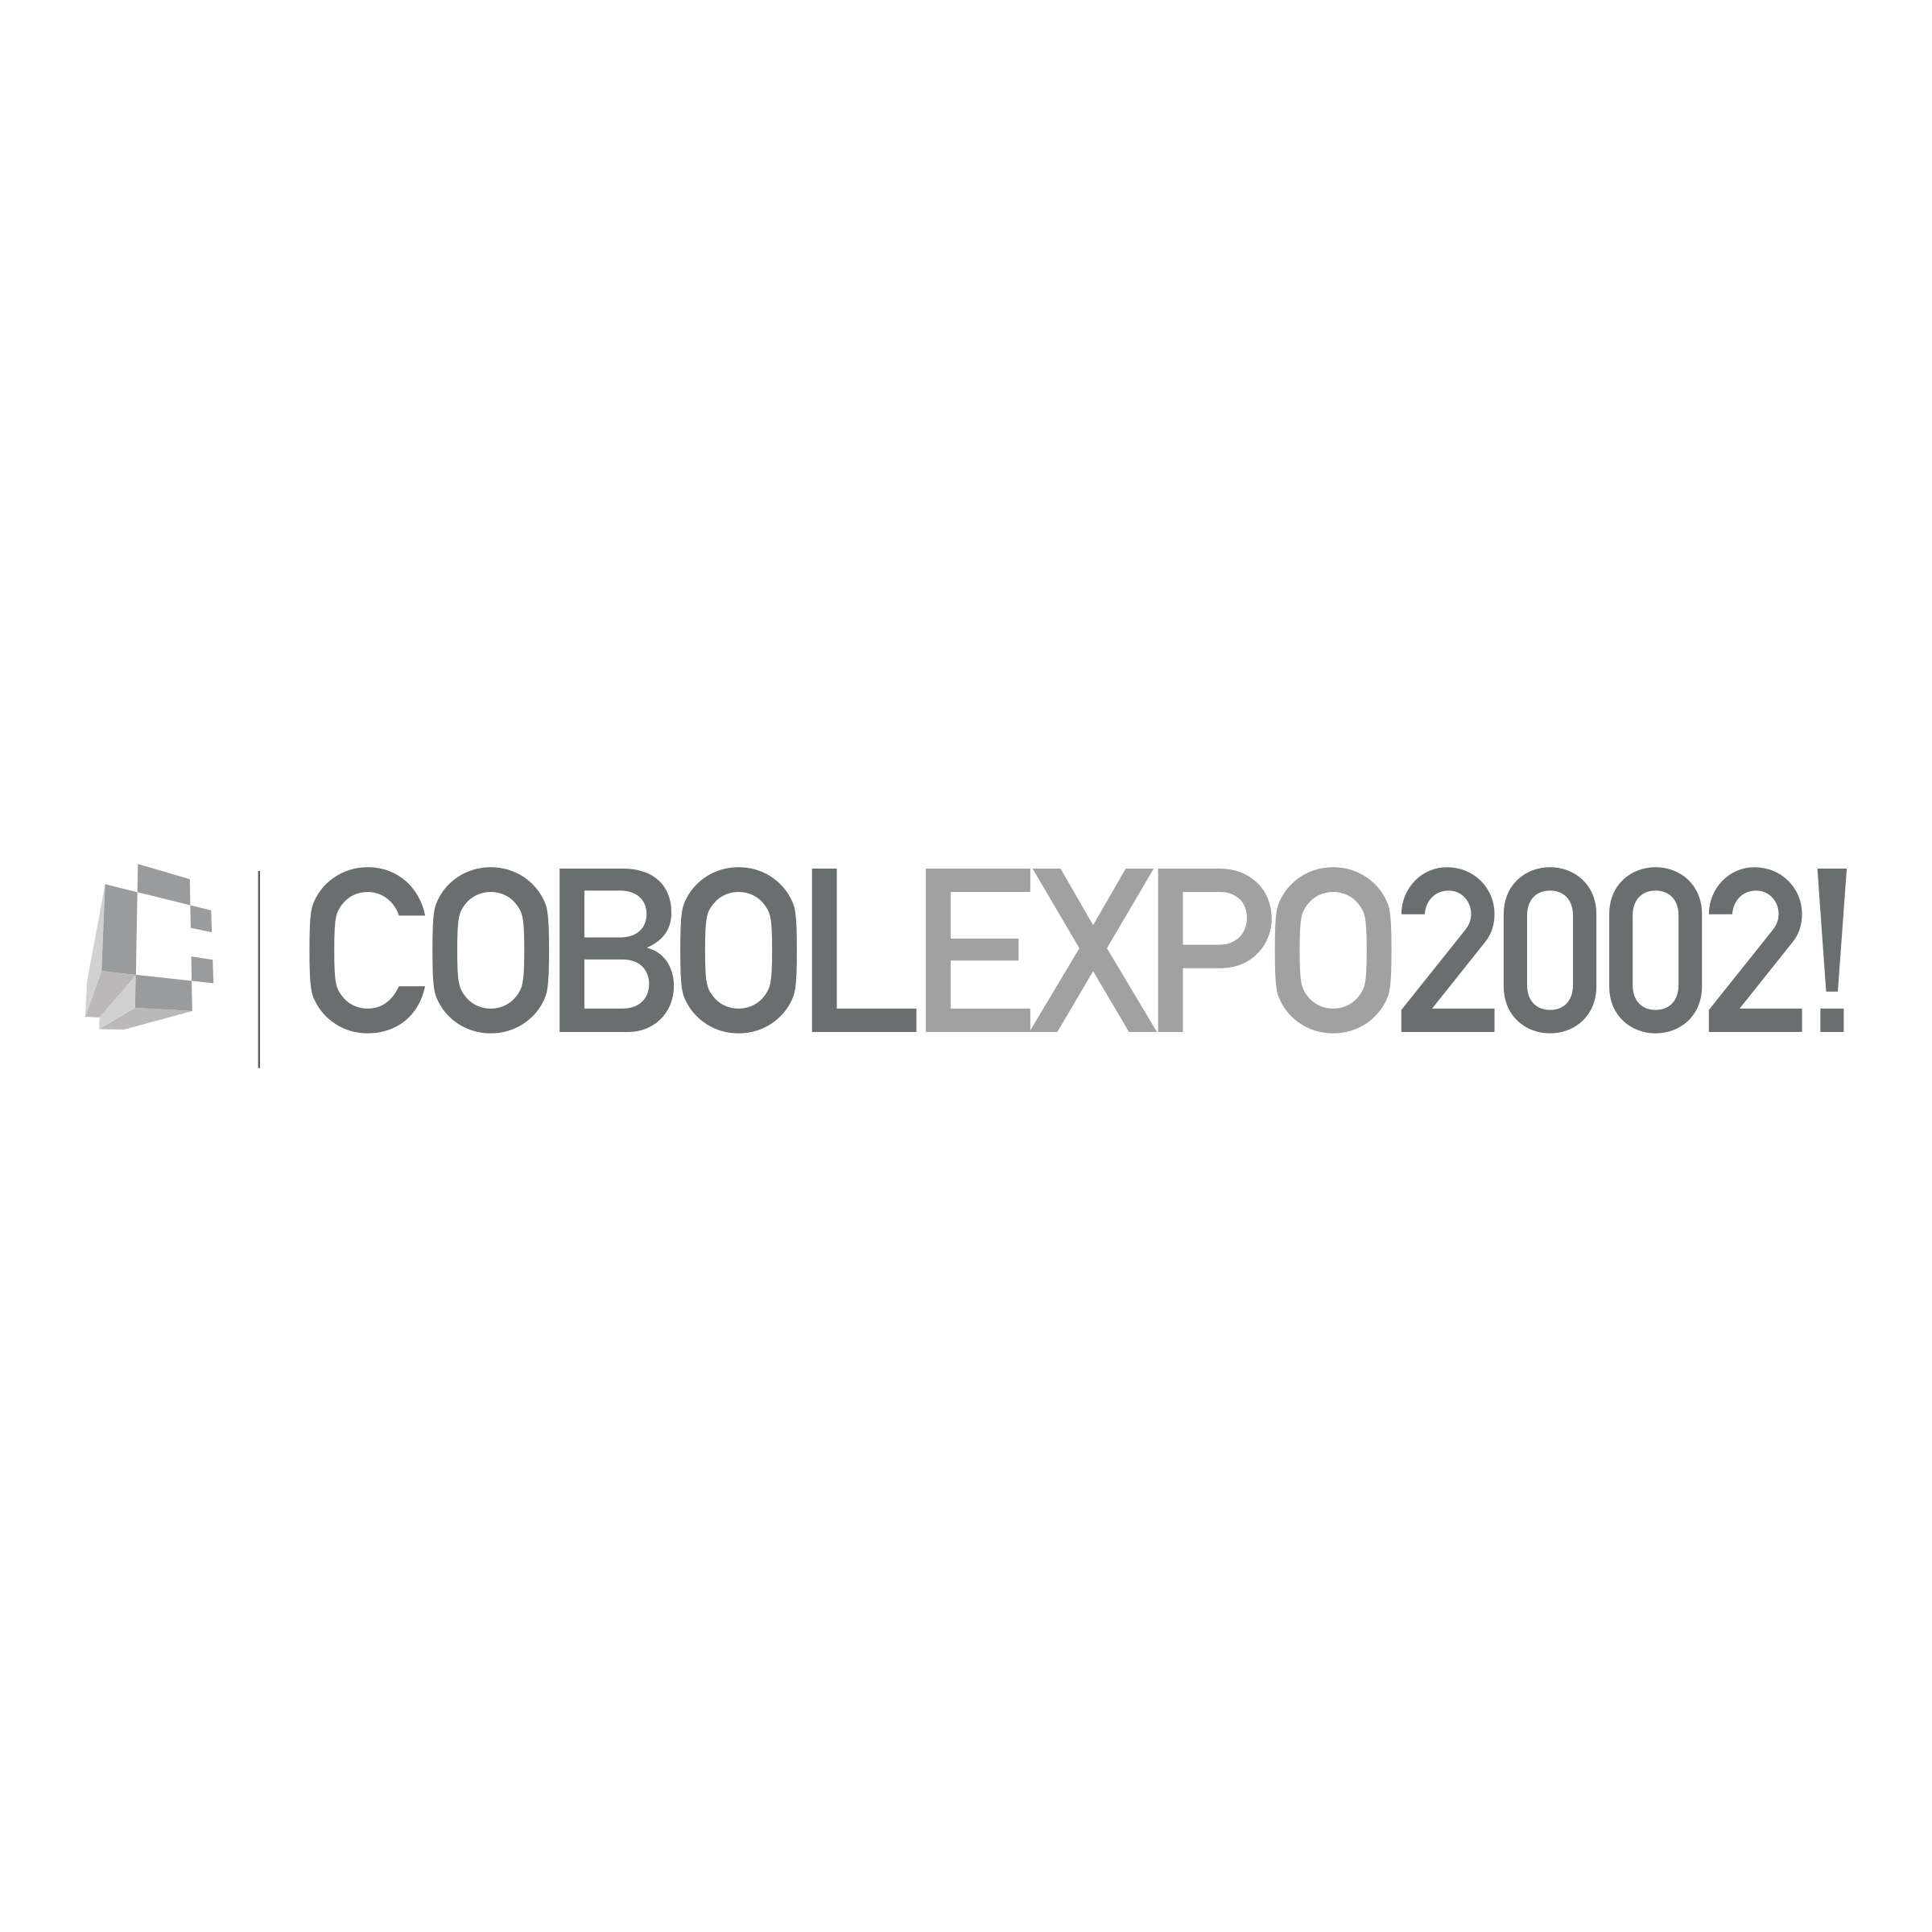 COBOL Logo - Cobol Expo 2002 Logo PNG Transparent & SVG Vector